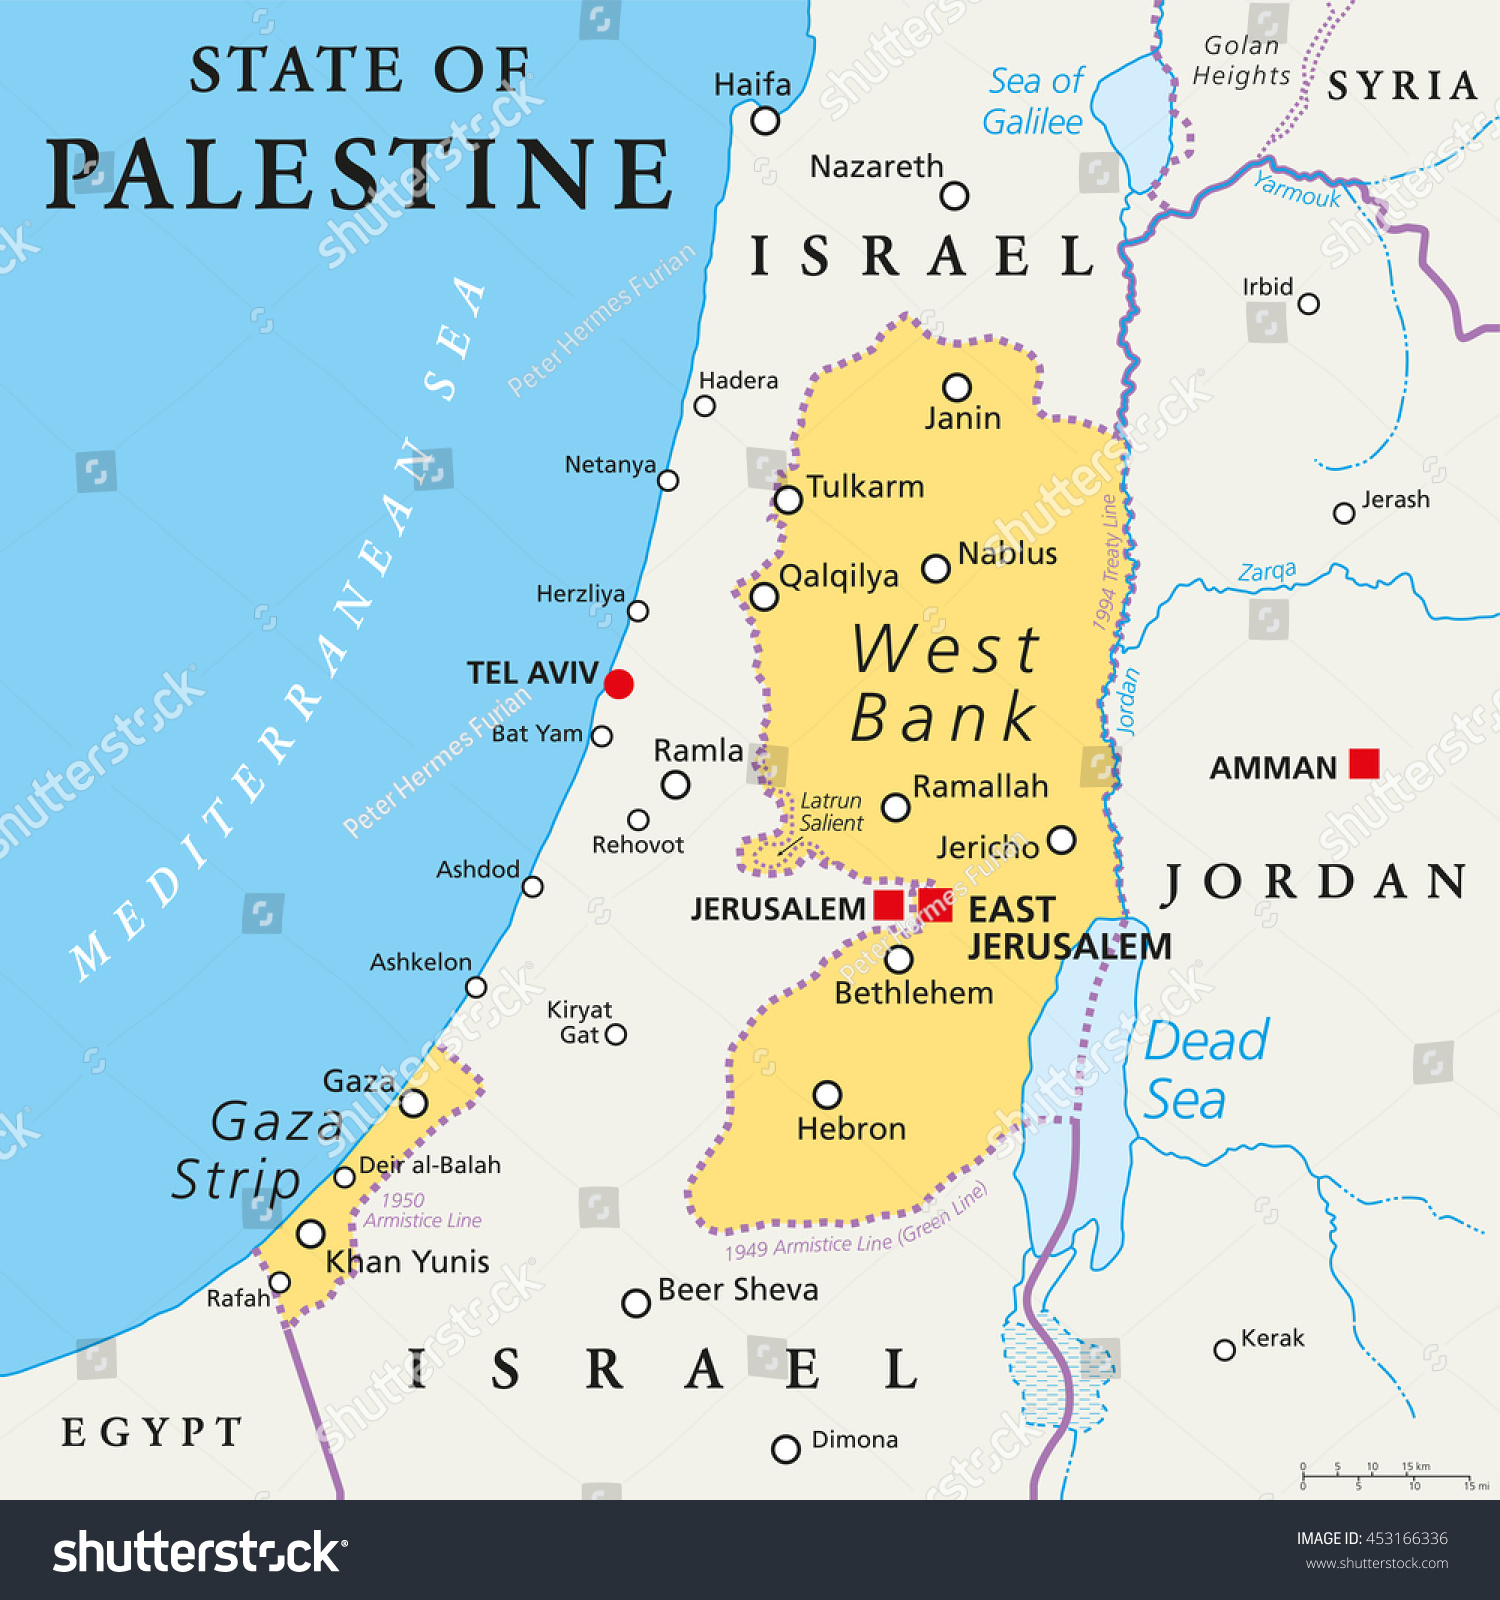 Hla Oo 39 s Blog OIC Muslims Declare Jerusalem The Capital Of Palestine